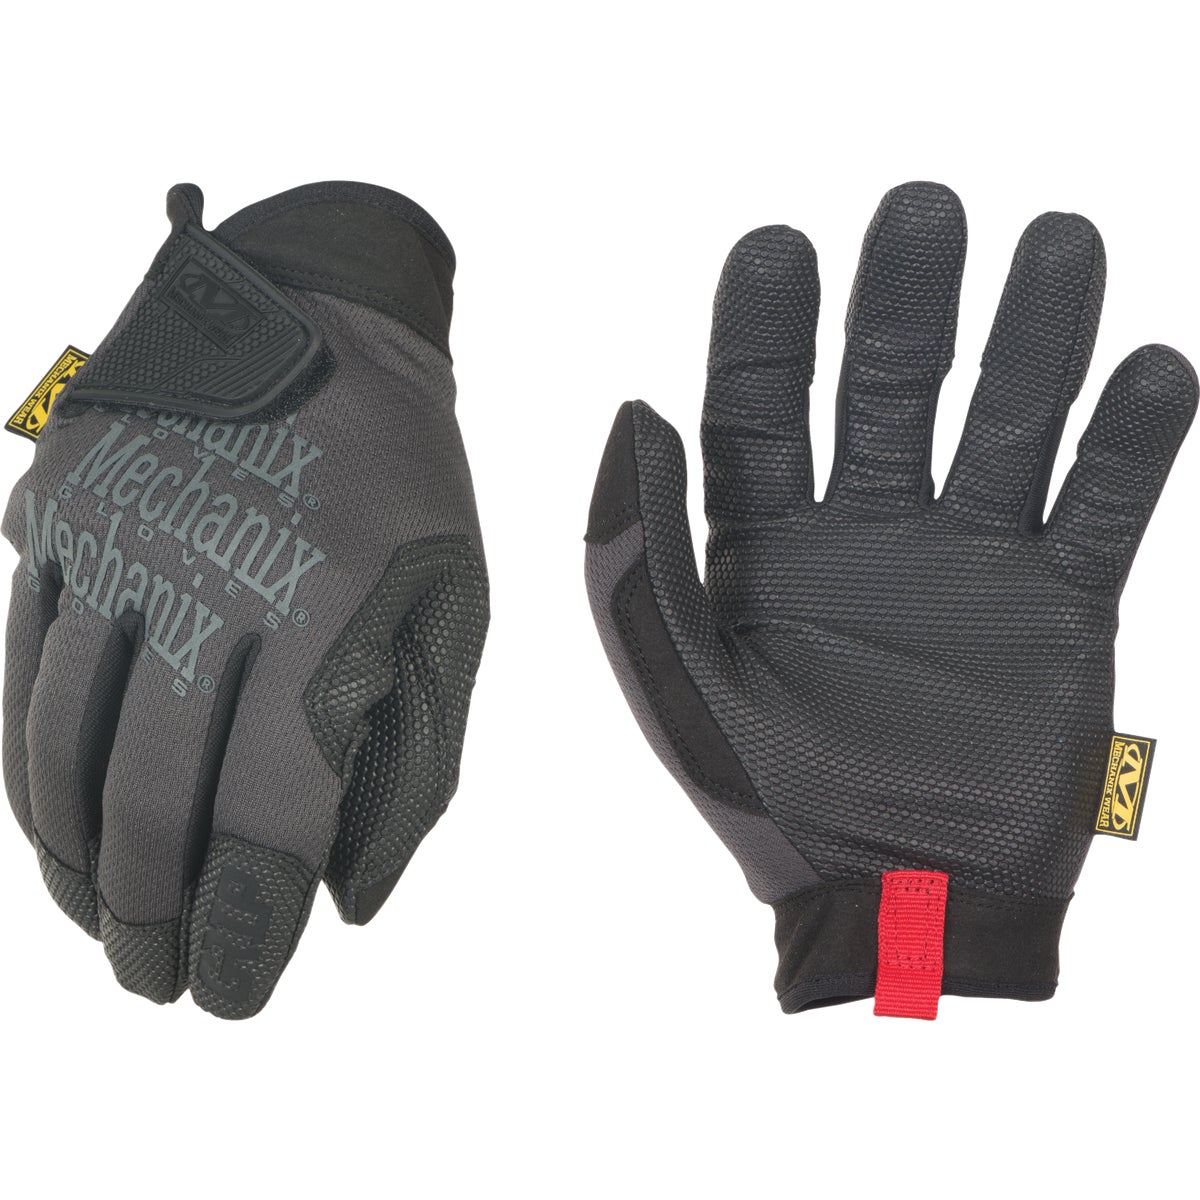 MSG-05-011 Mechanix Wear Specialty Grip Mens Work Glove